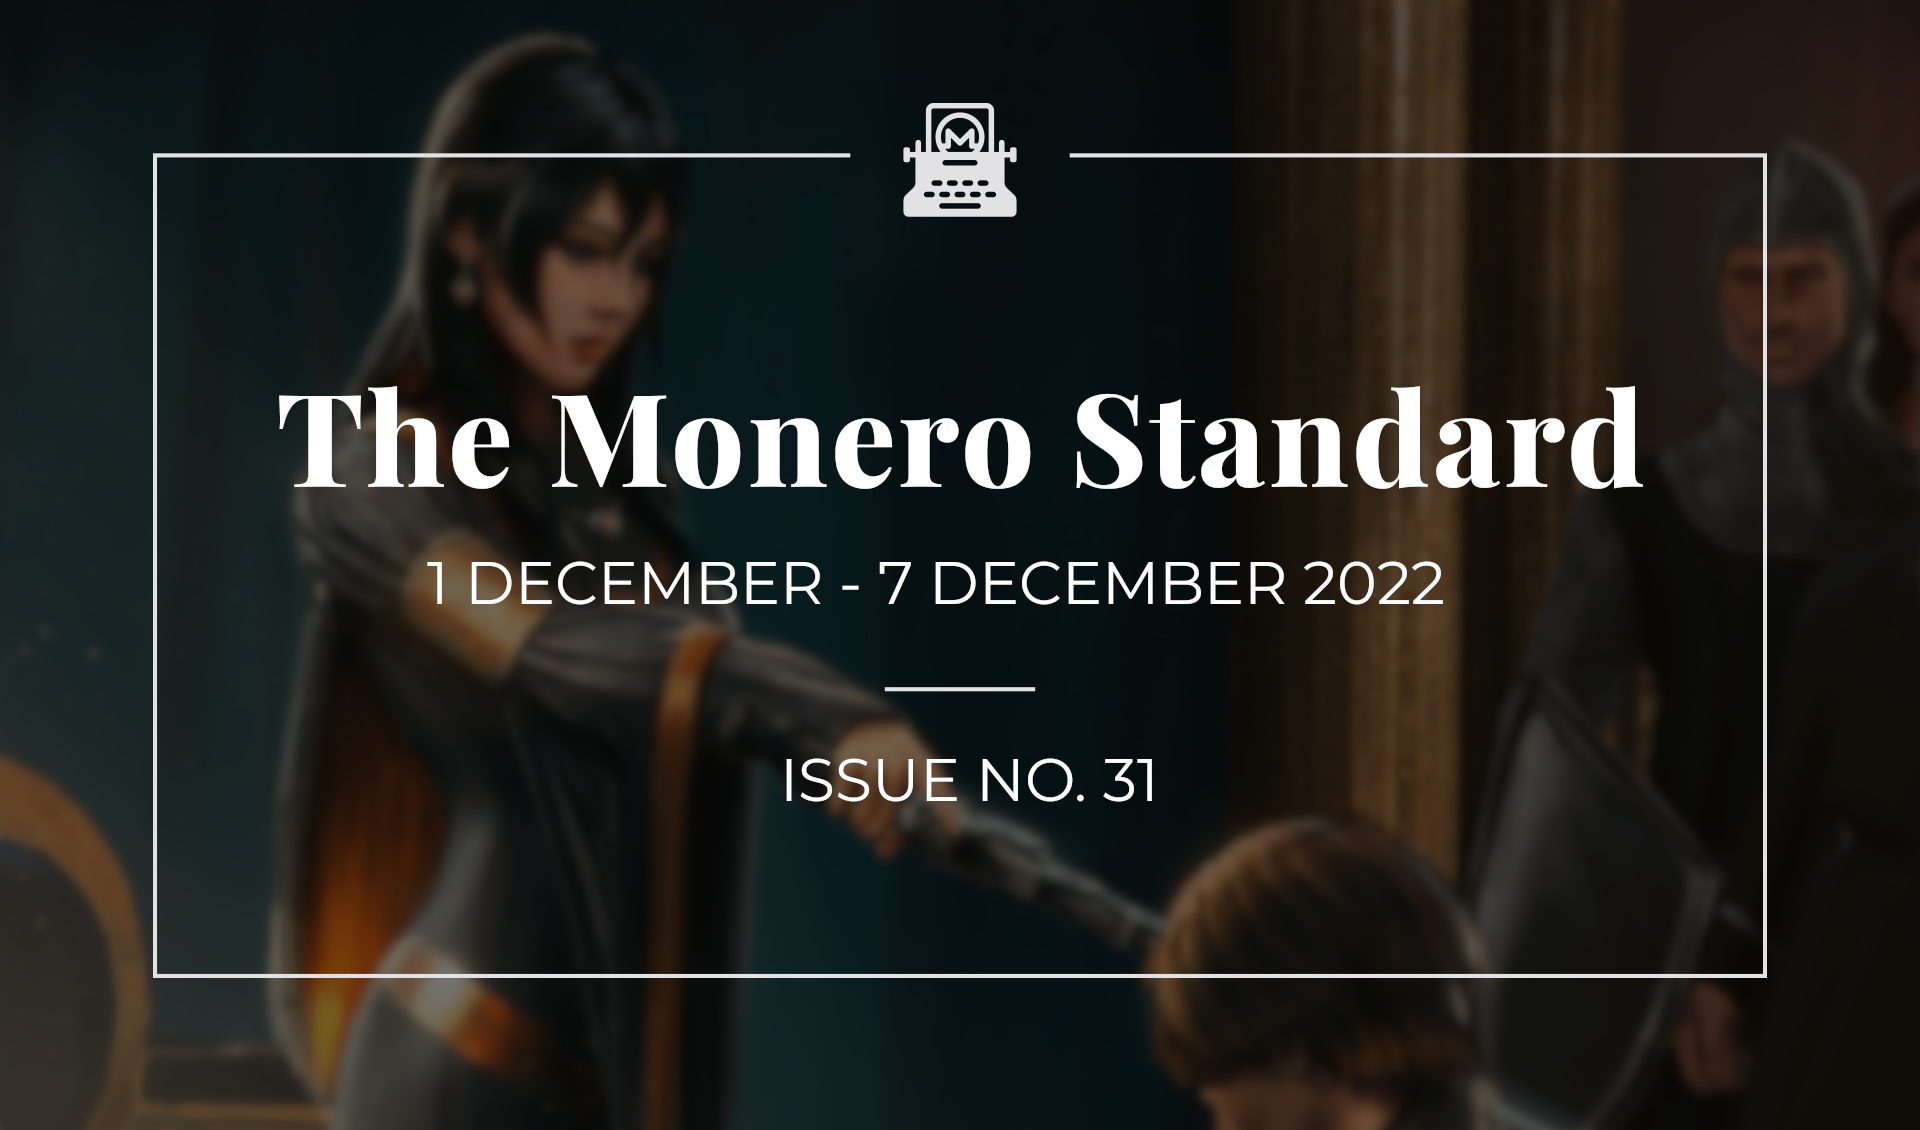 The Monero Standard #31: 1 December 2022 - 7 December 2022